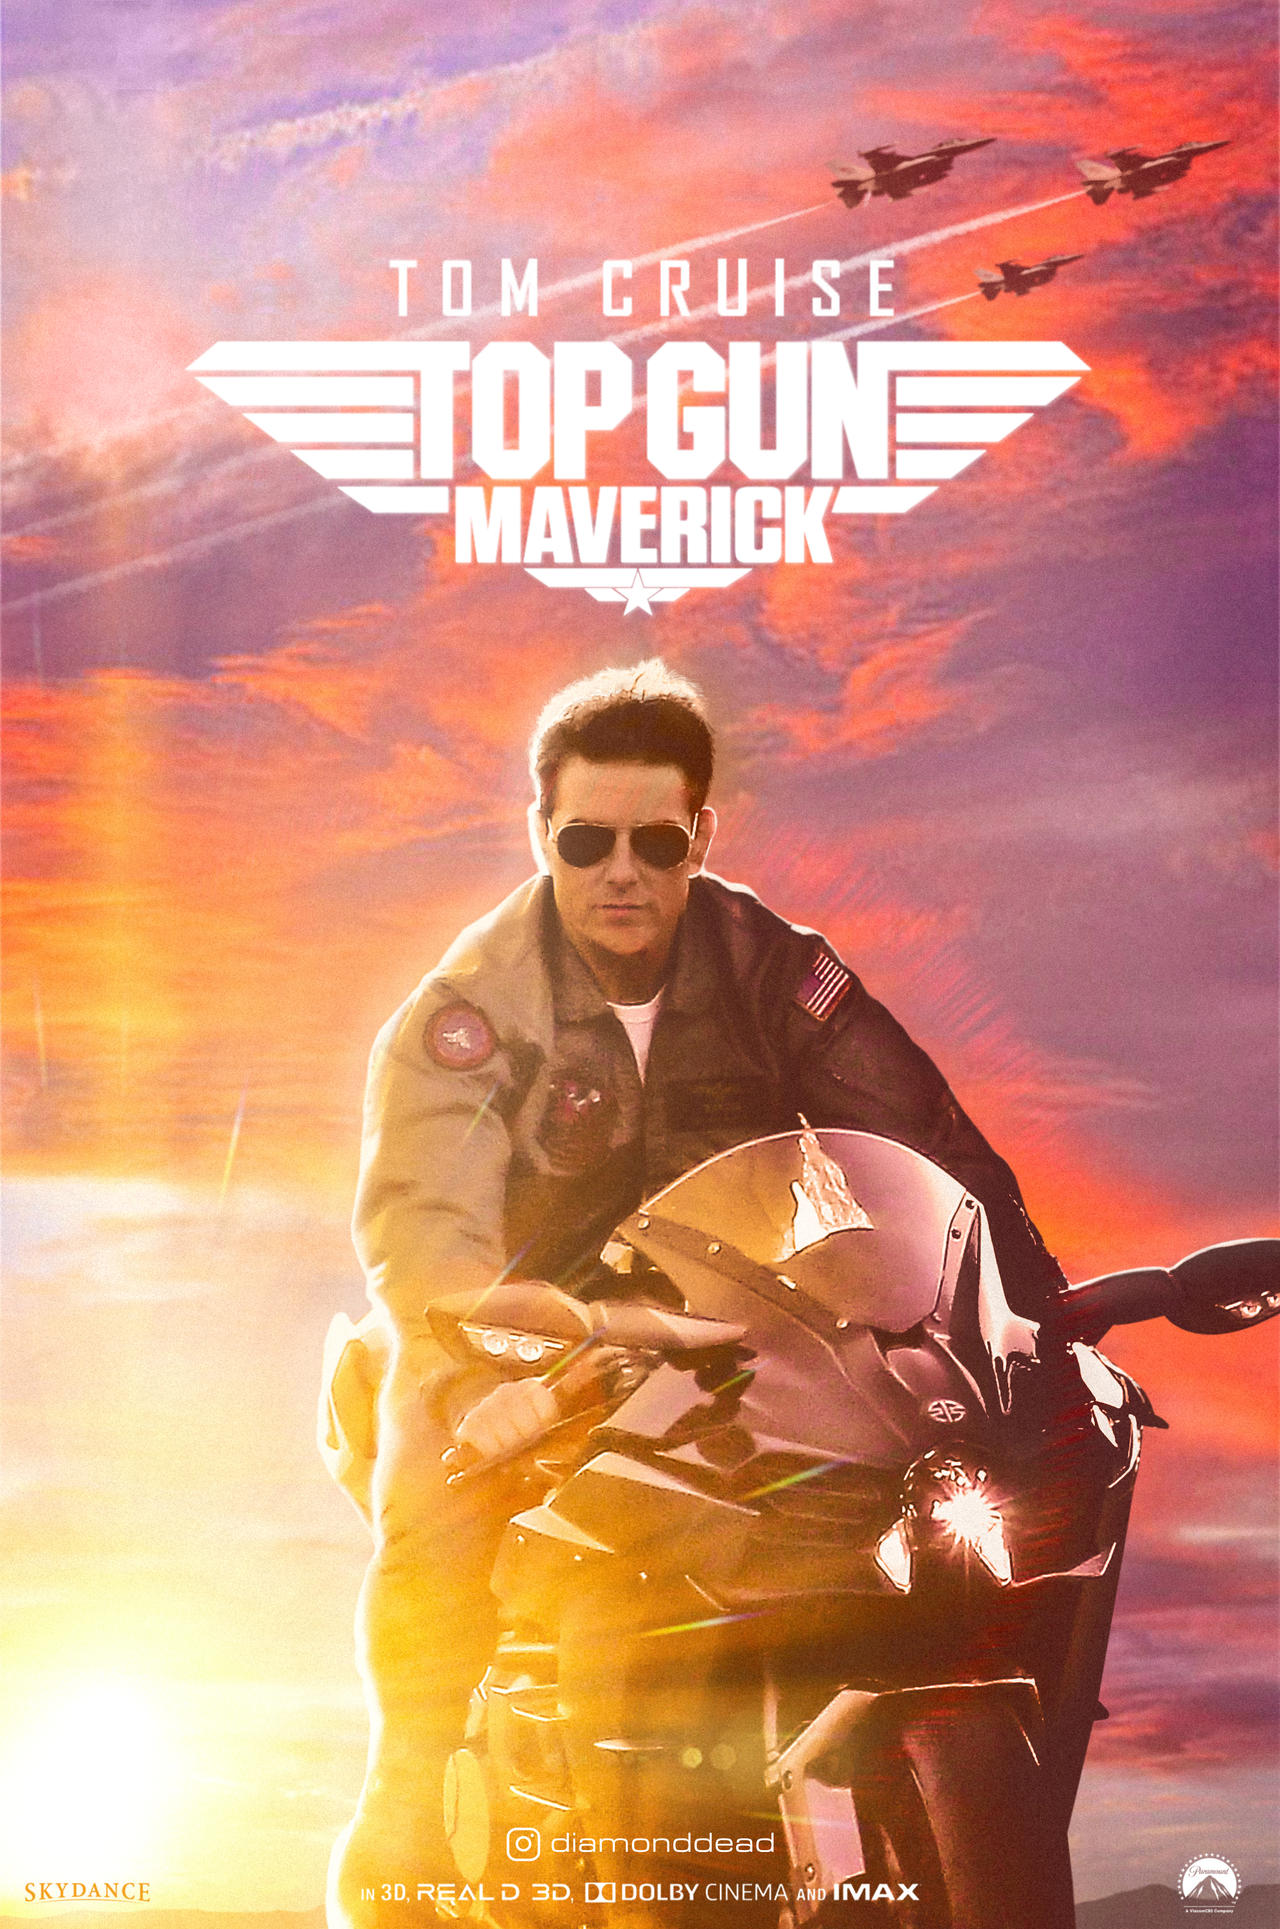 Music From Top Gun Maverick 2022 by GALGALIZIA on DeviantArt